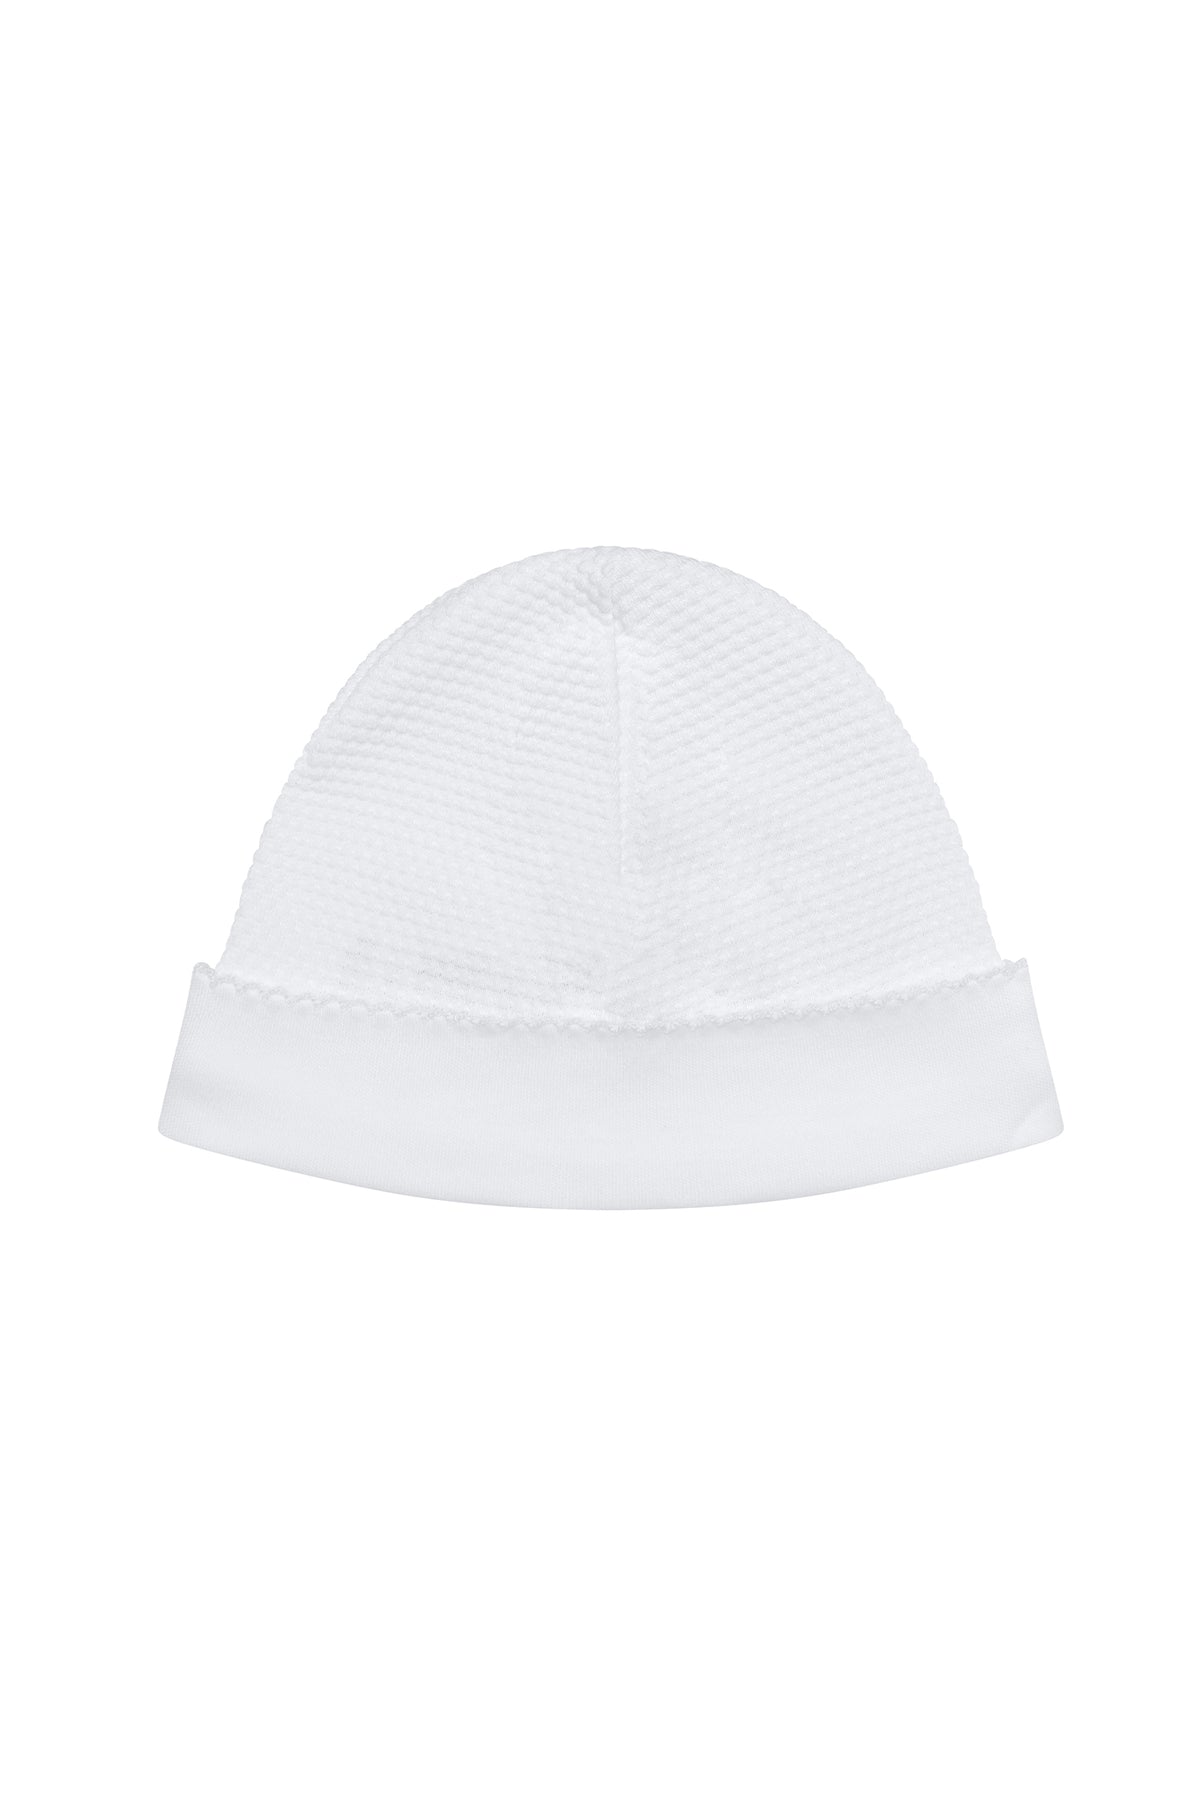 White Bubble Baby Hat, White Picot